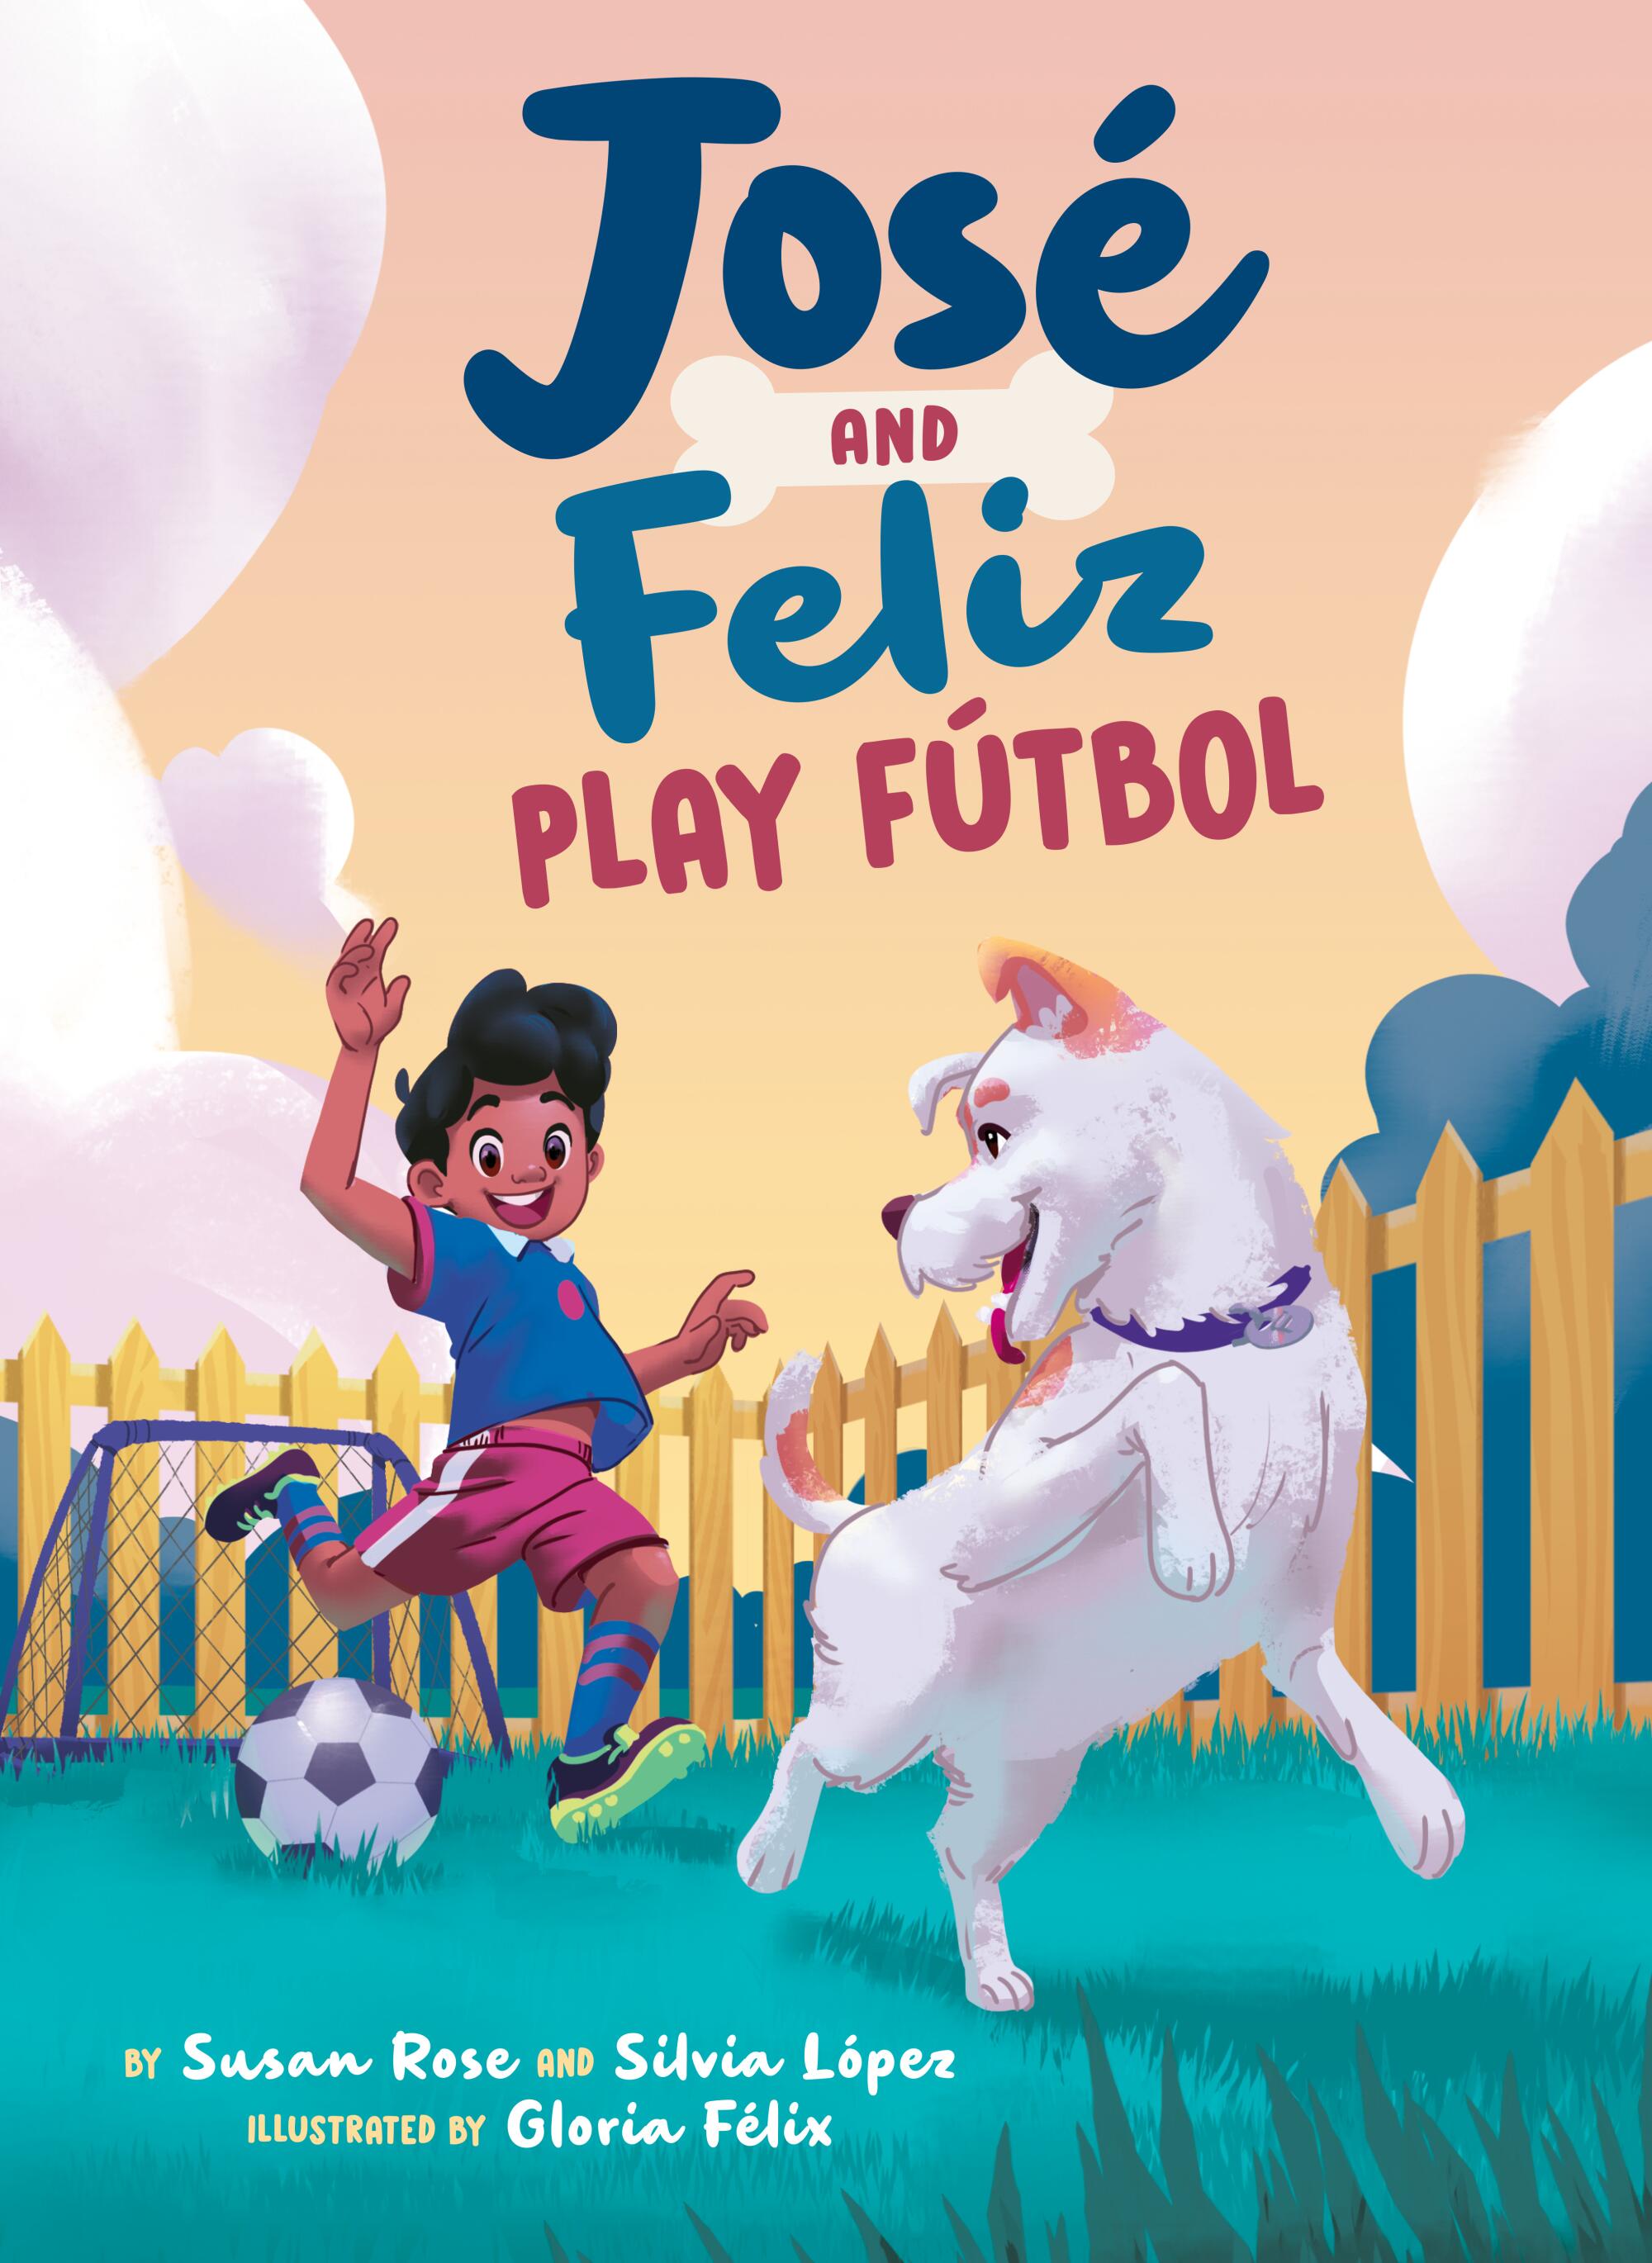 "José and Feliz Play Fútbol" book cover